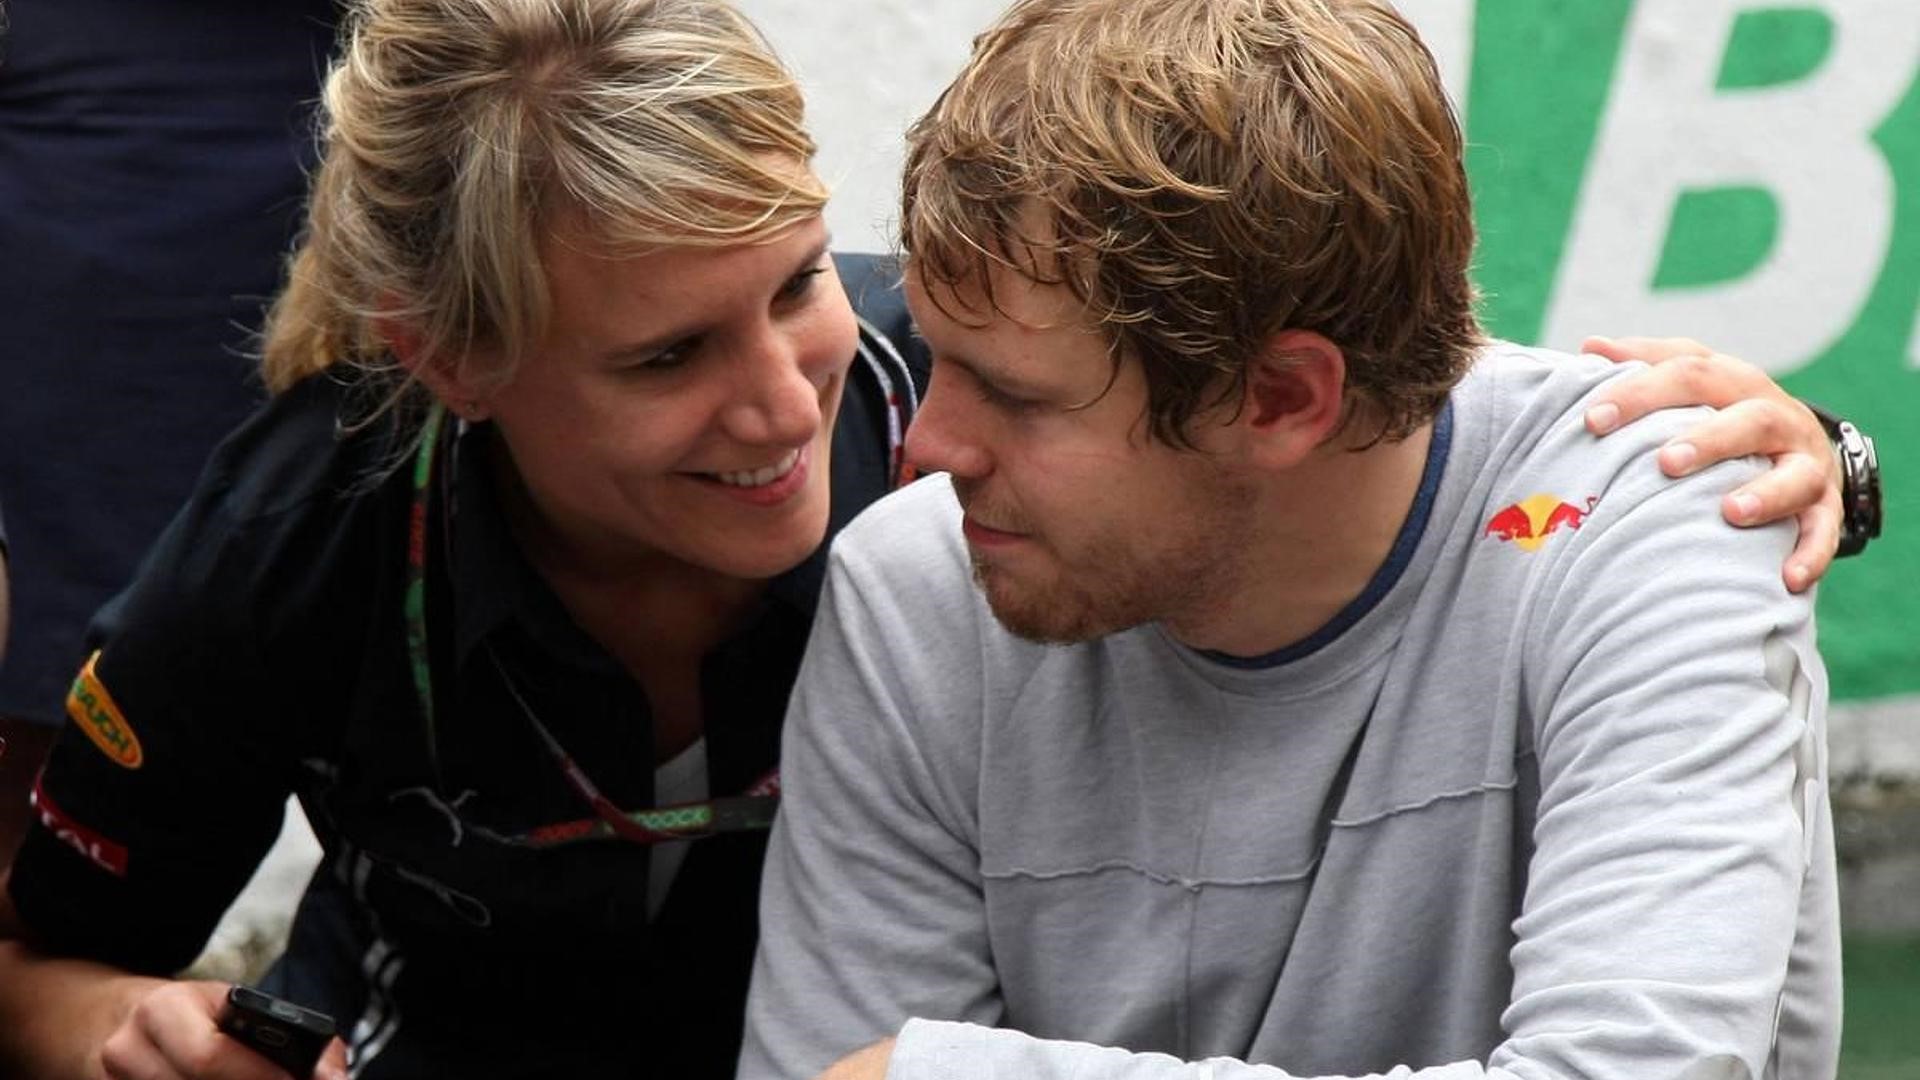 Sebastian Vettel and his press officer at Red Bull racing Britta Roeske in 2010.